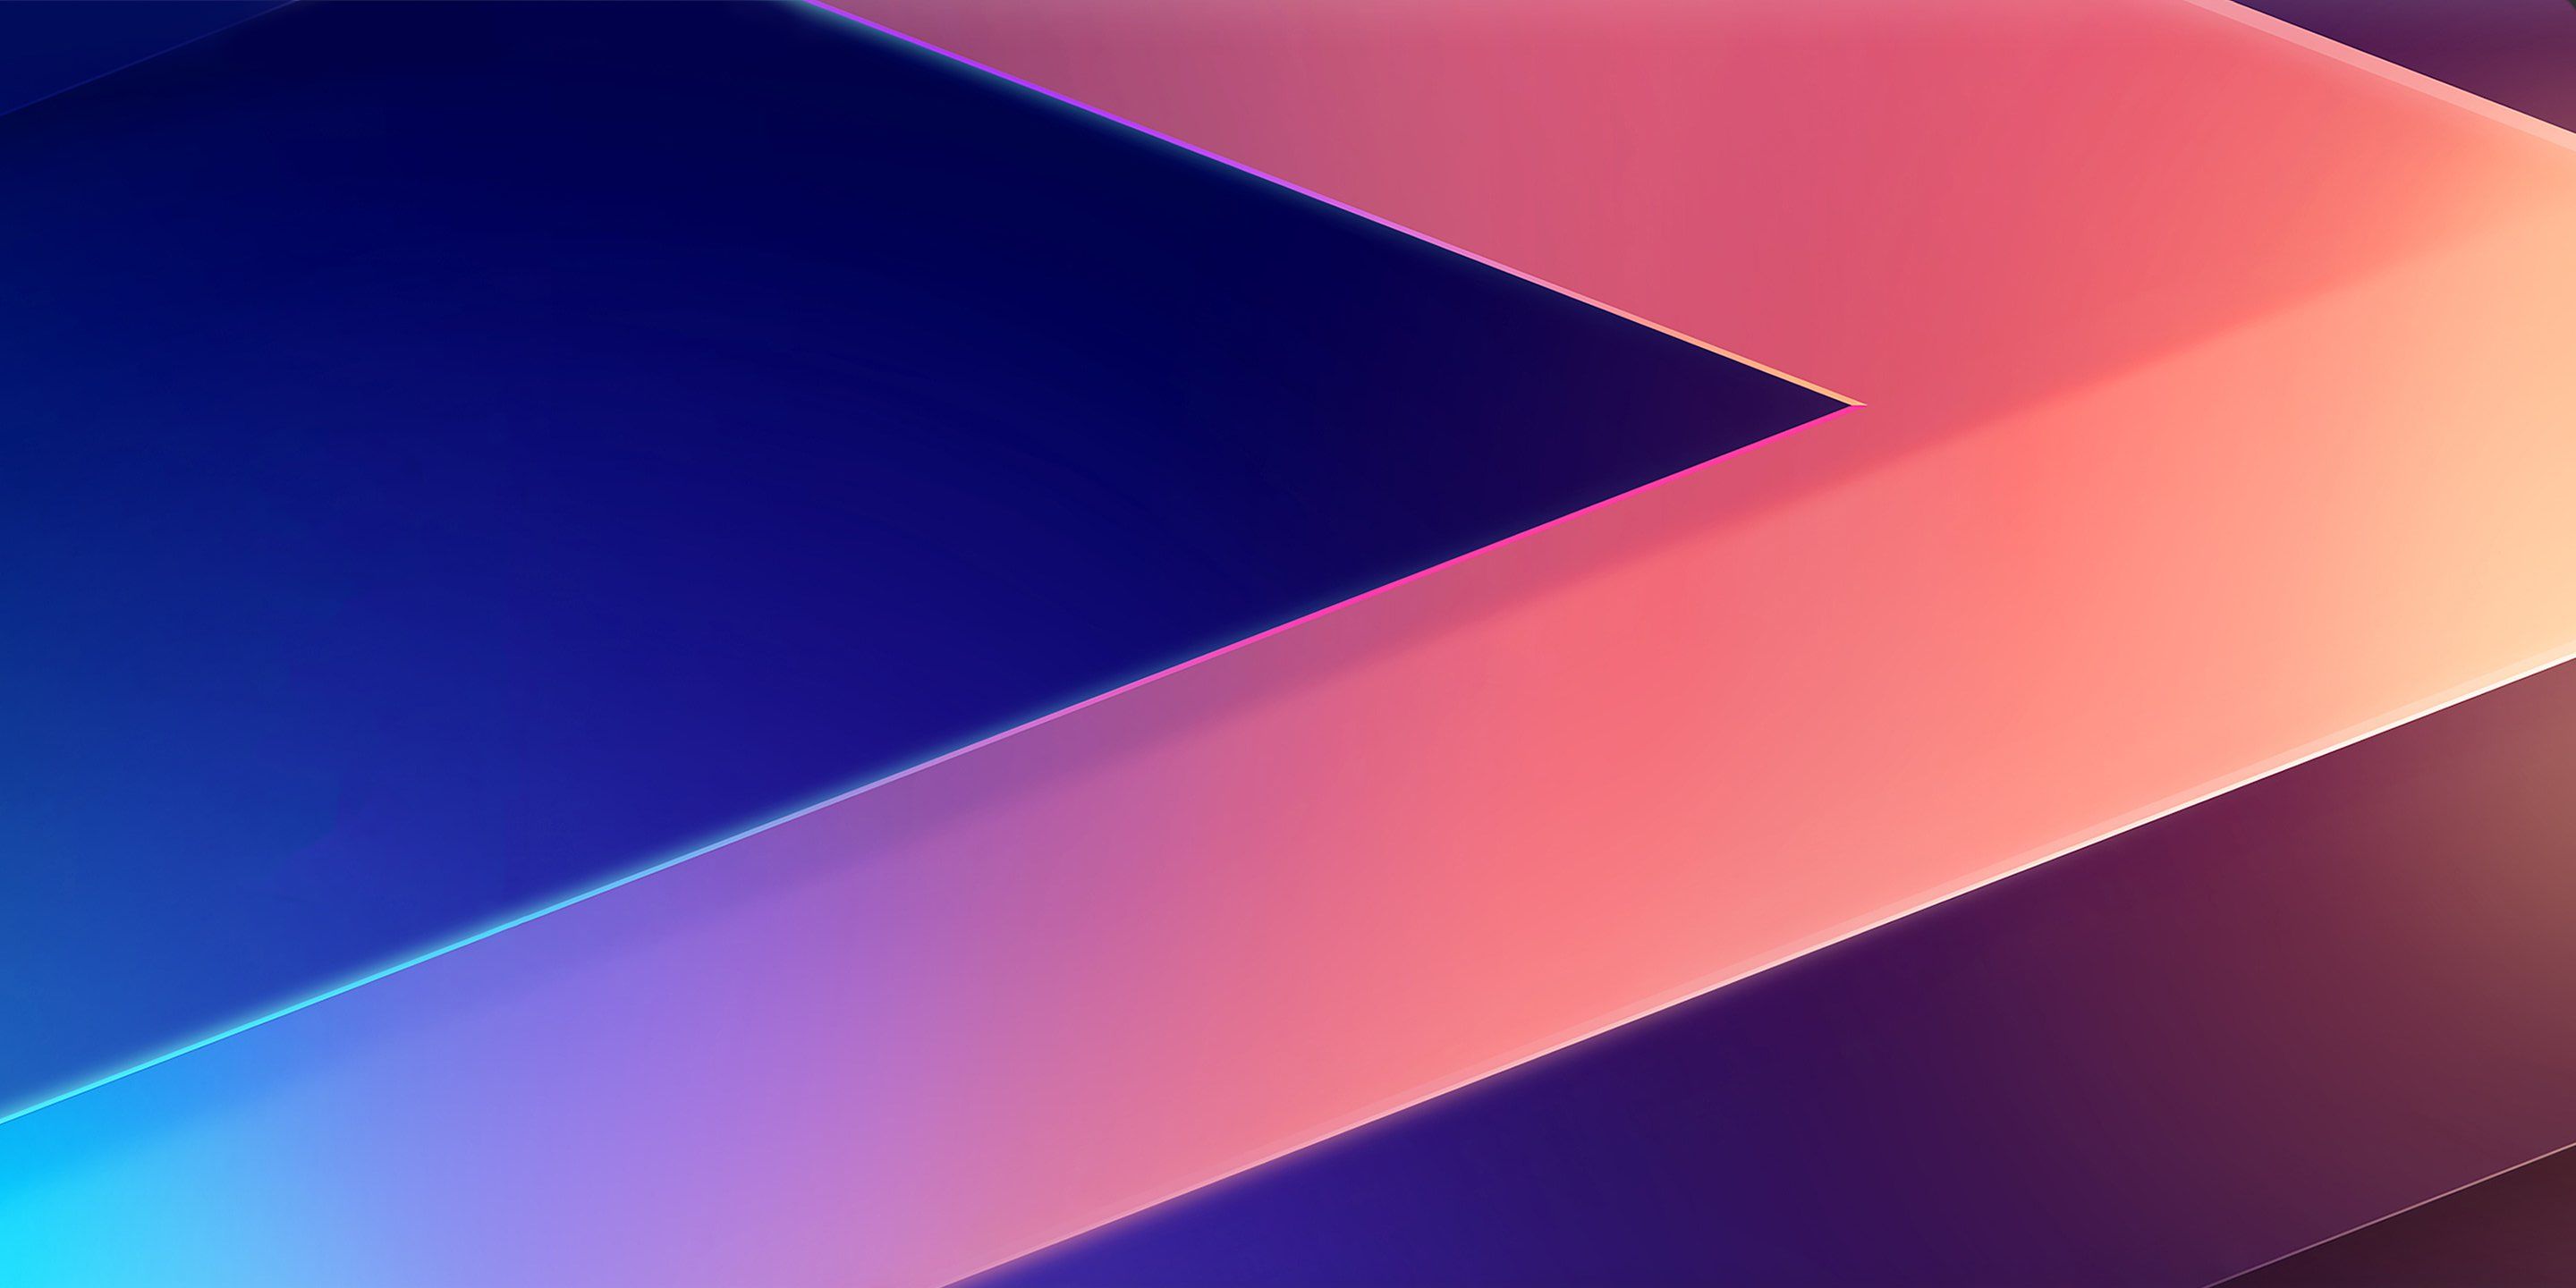 #Geometric, #Colorful, D, #LG V #Stock. Mocah.org HD Desktop Wallpaper